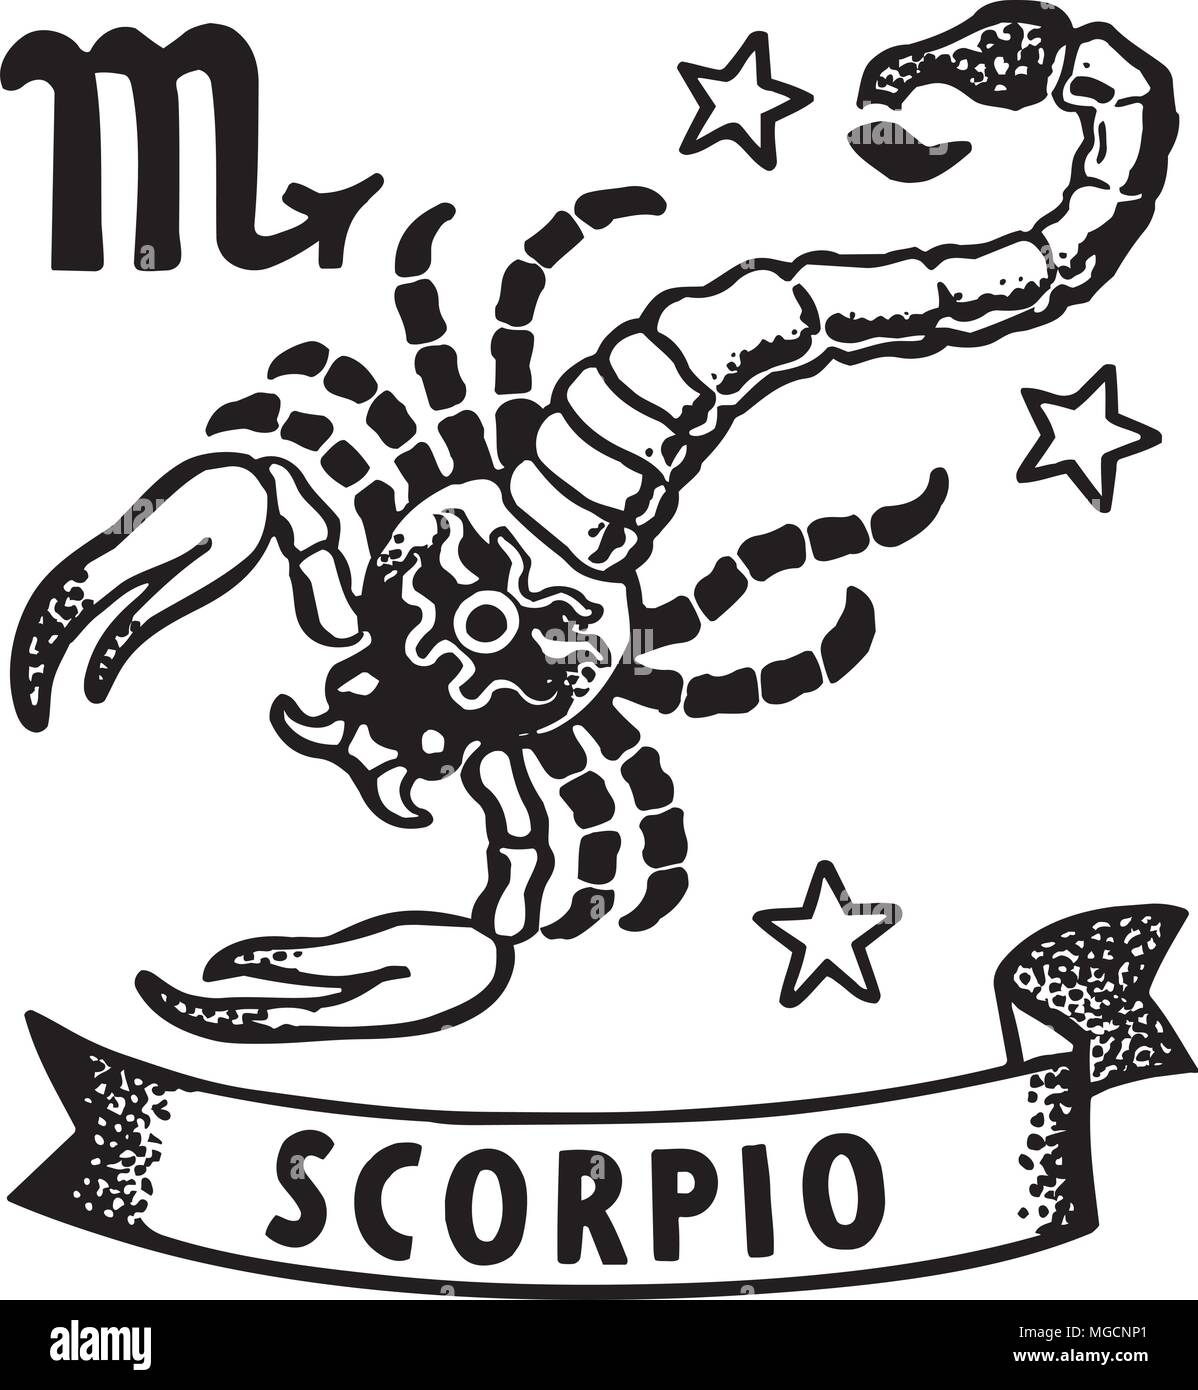 Scorpio Retro Clipart Illustration MGCNP1 